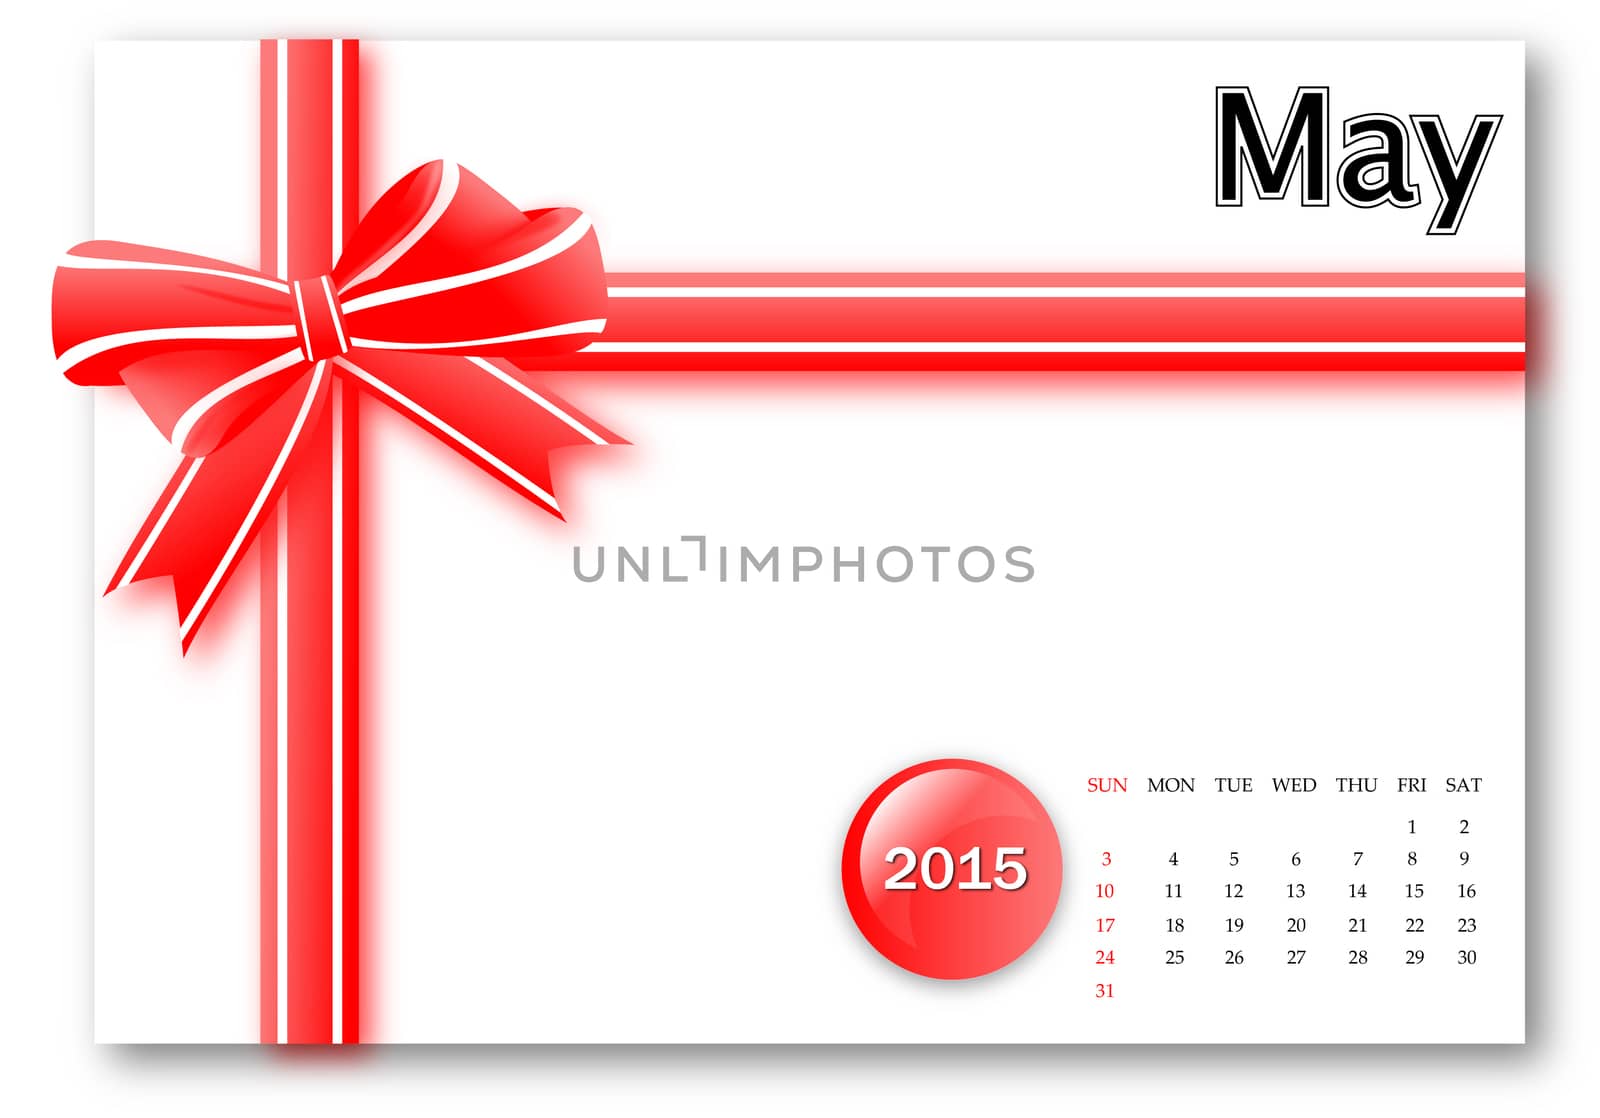 May 2015 - Calendar series with gift ribbon design